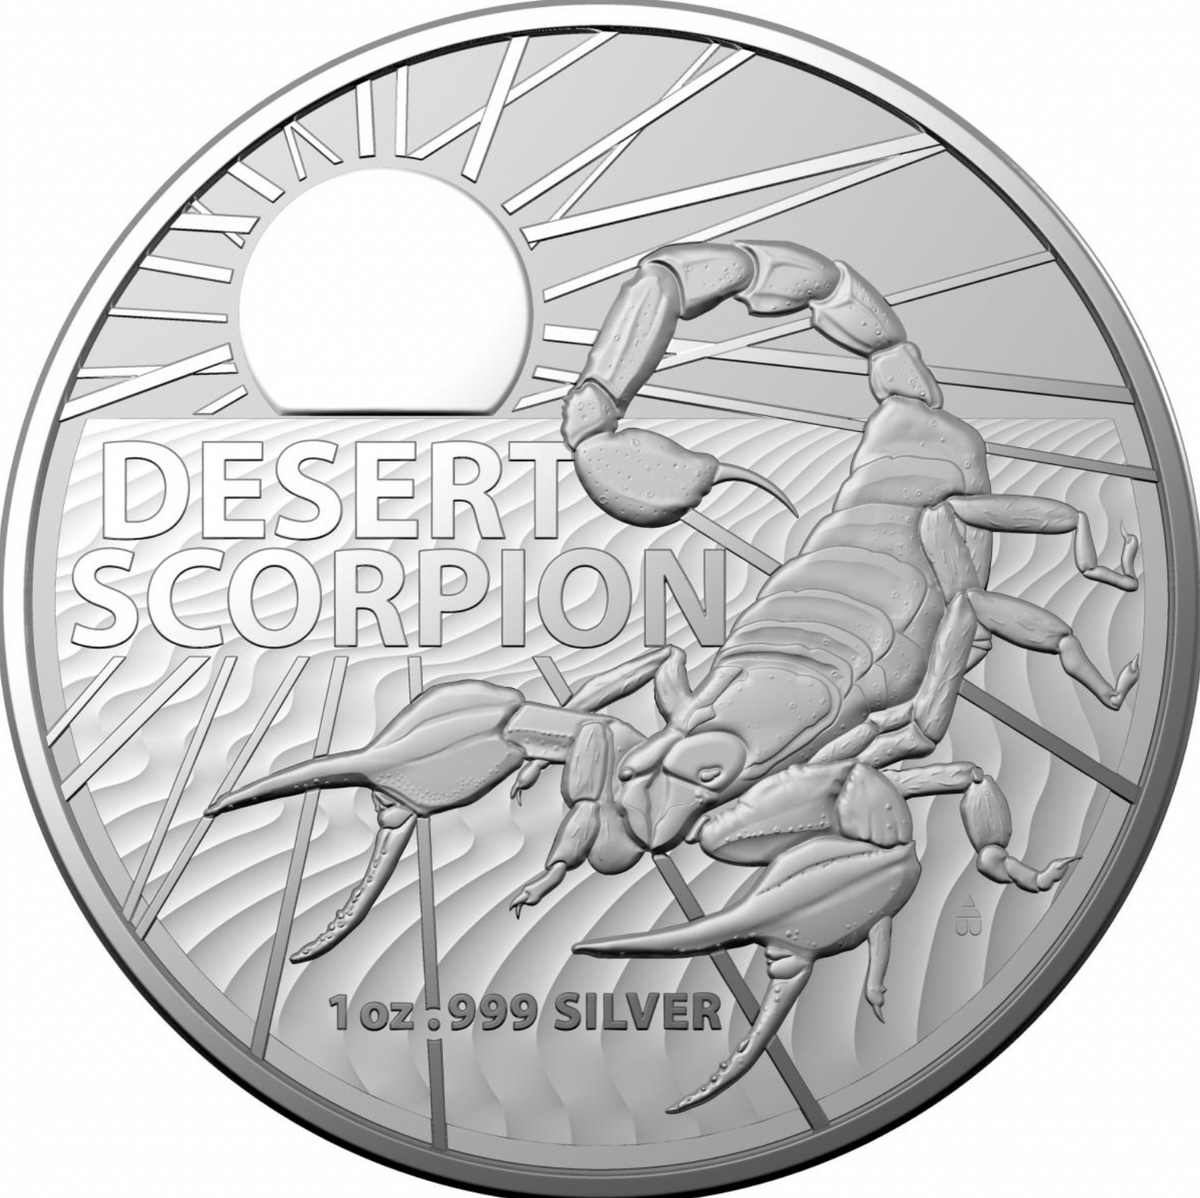 2022 $1 Silver Investment Coin - Australian Desert Scorpion.